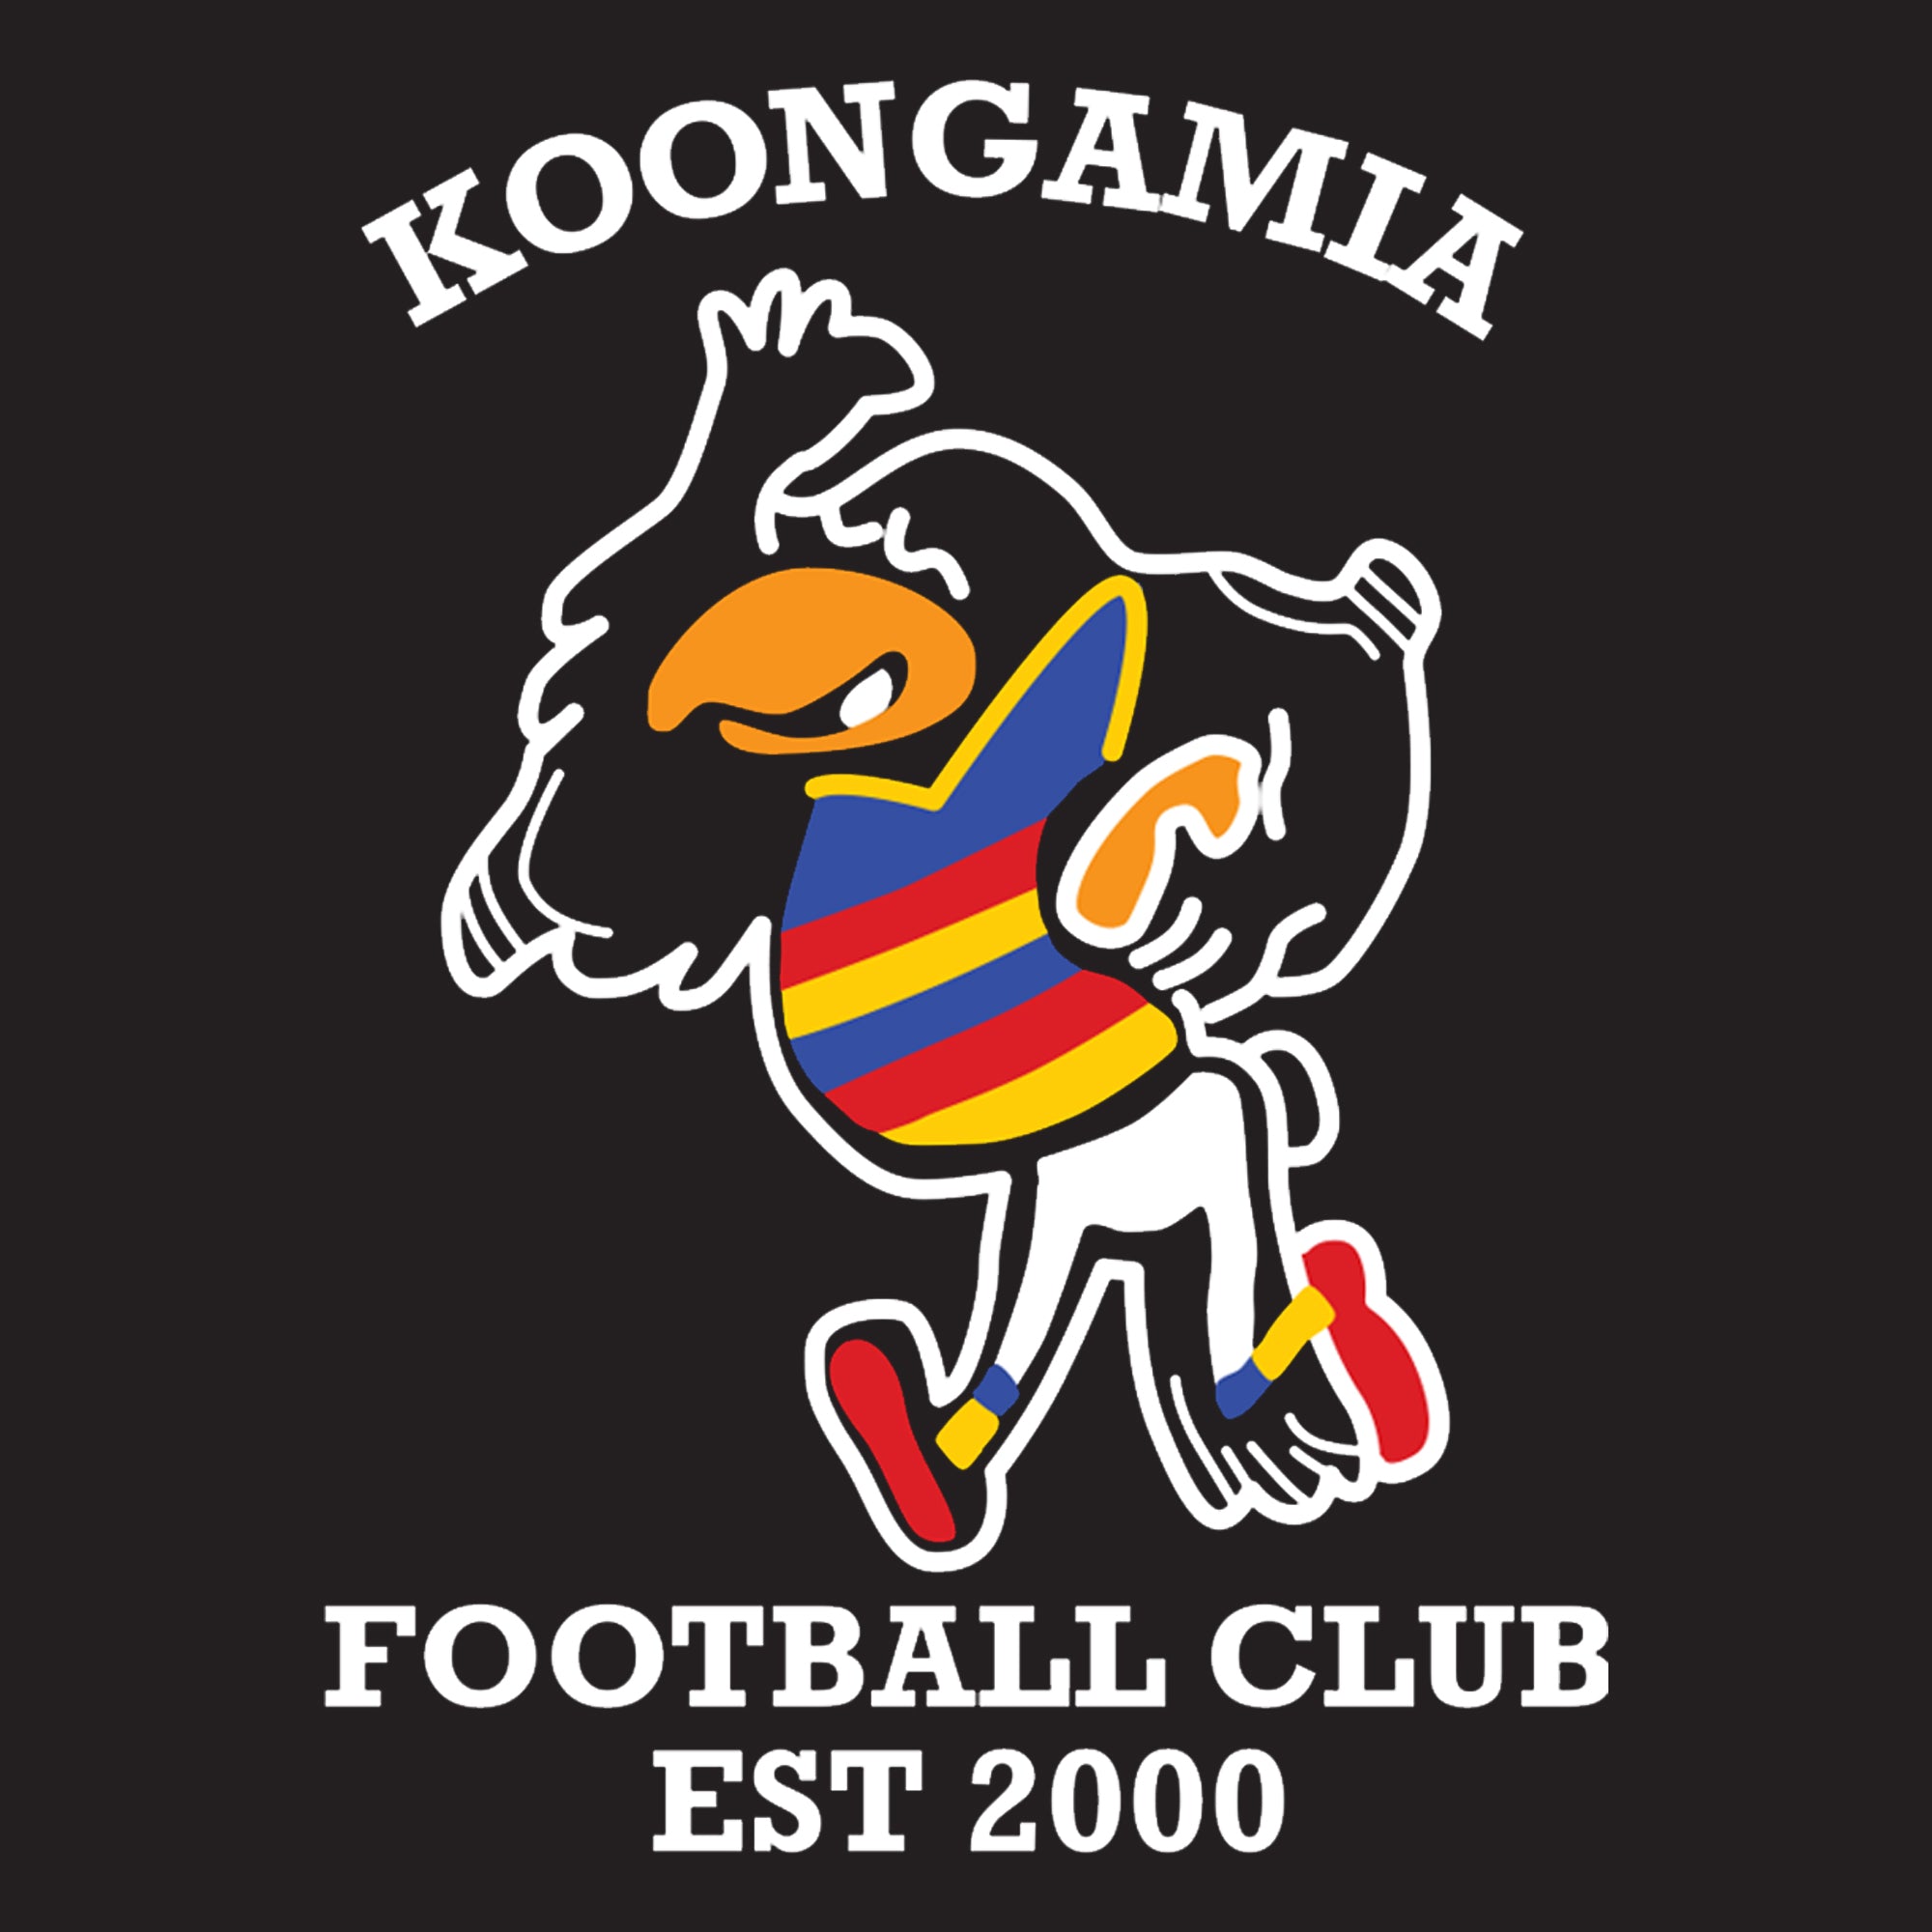 Koongamia Football Club